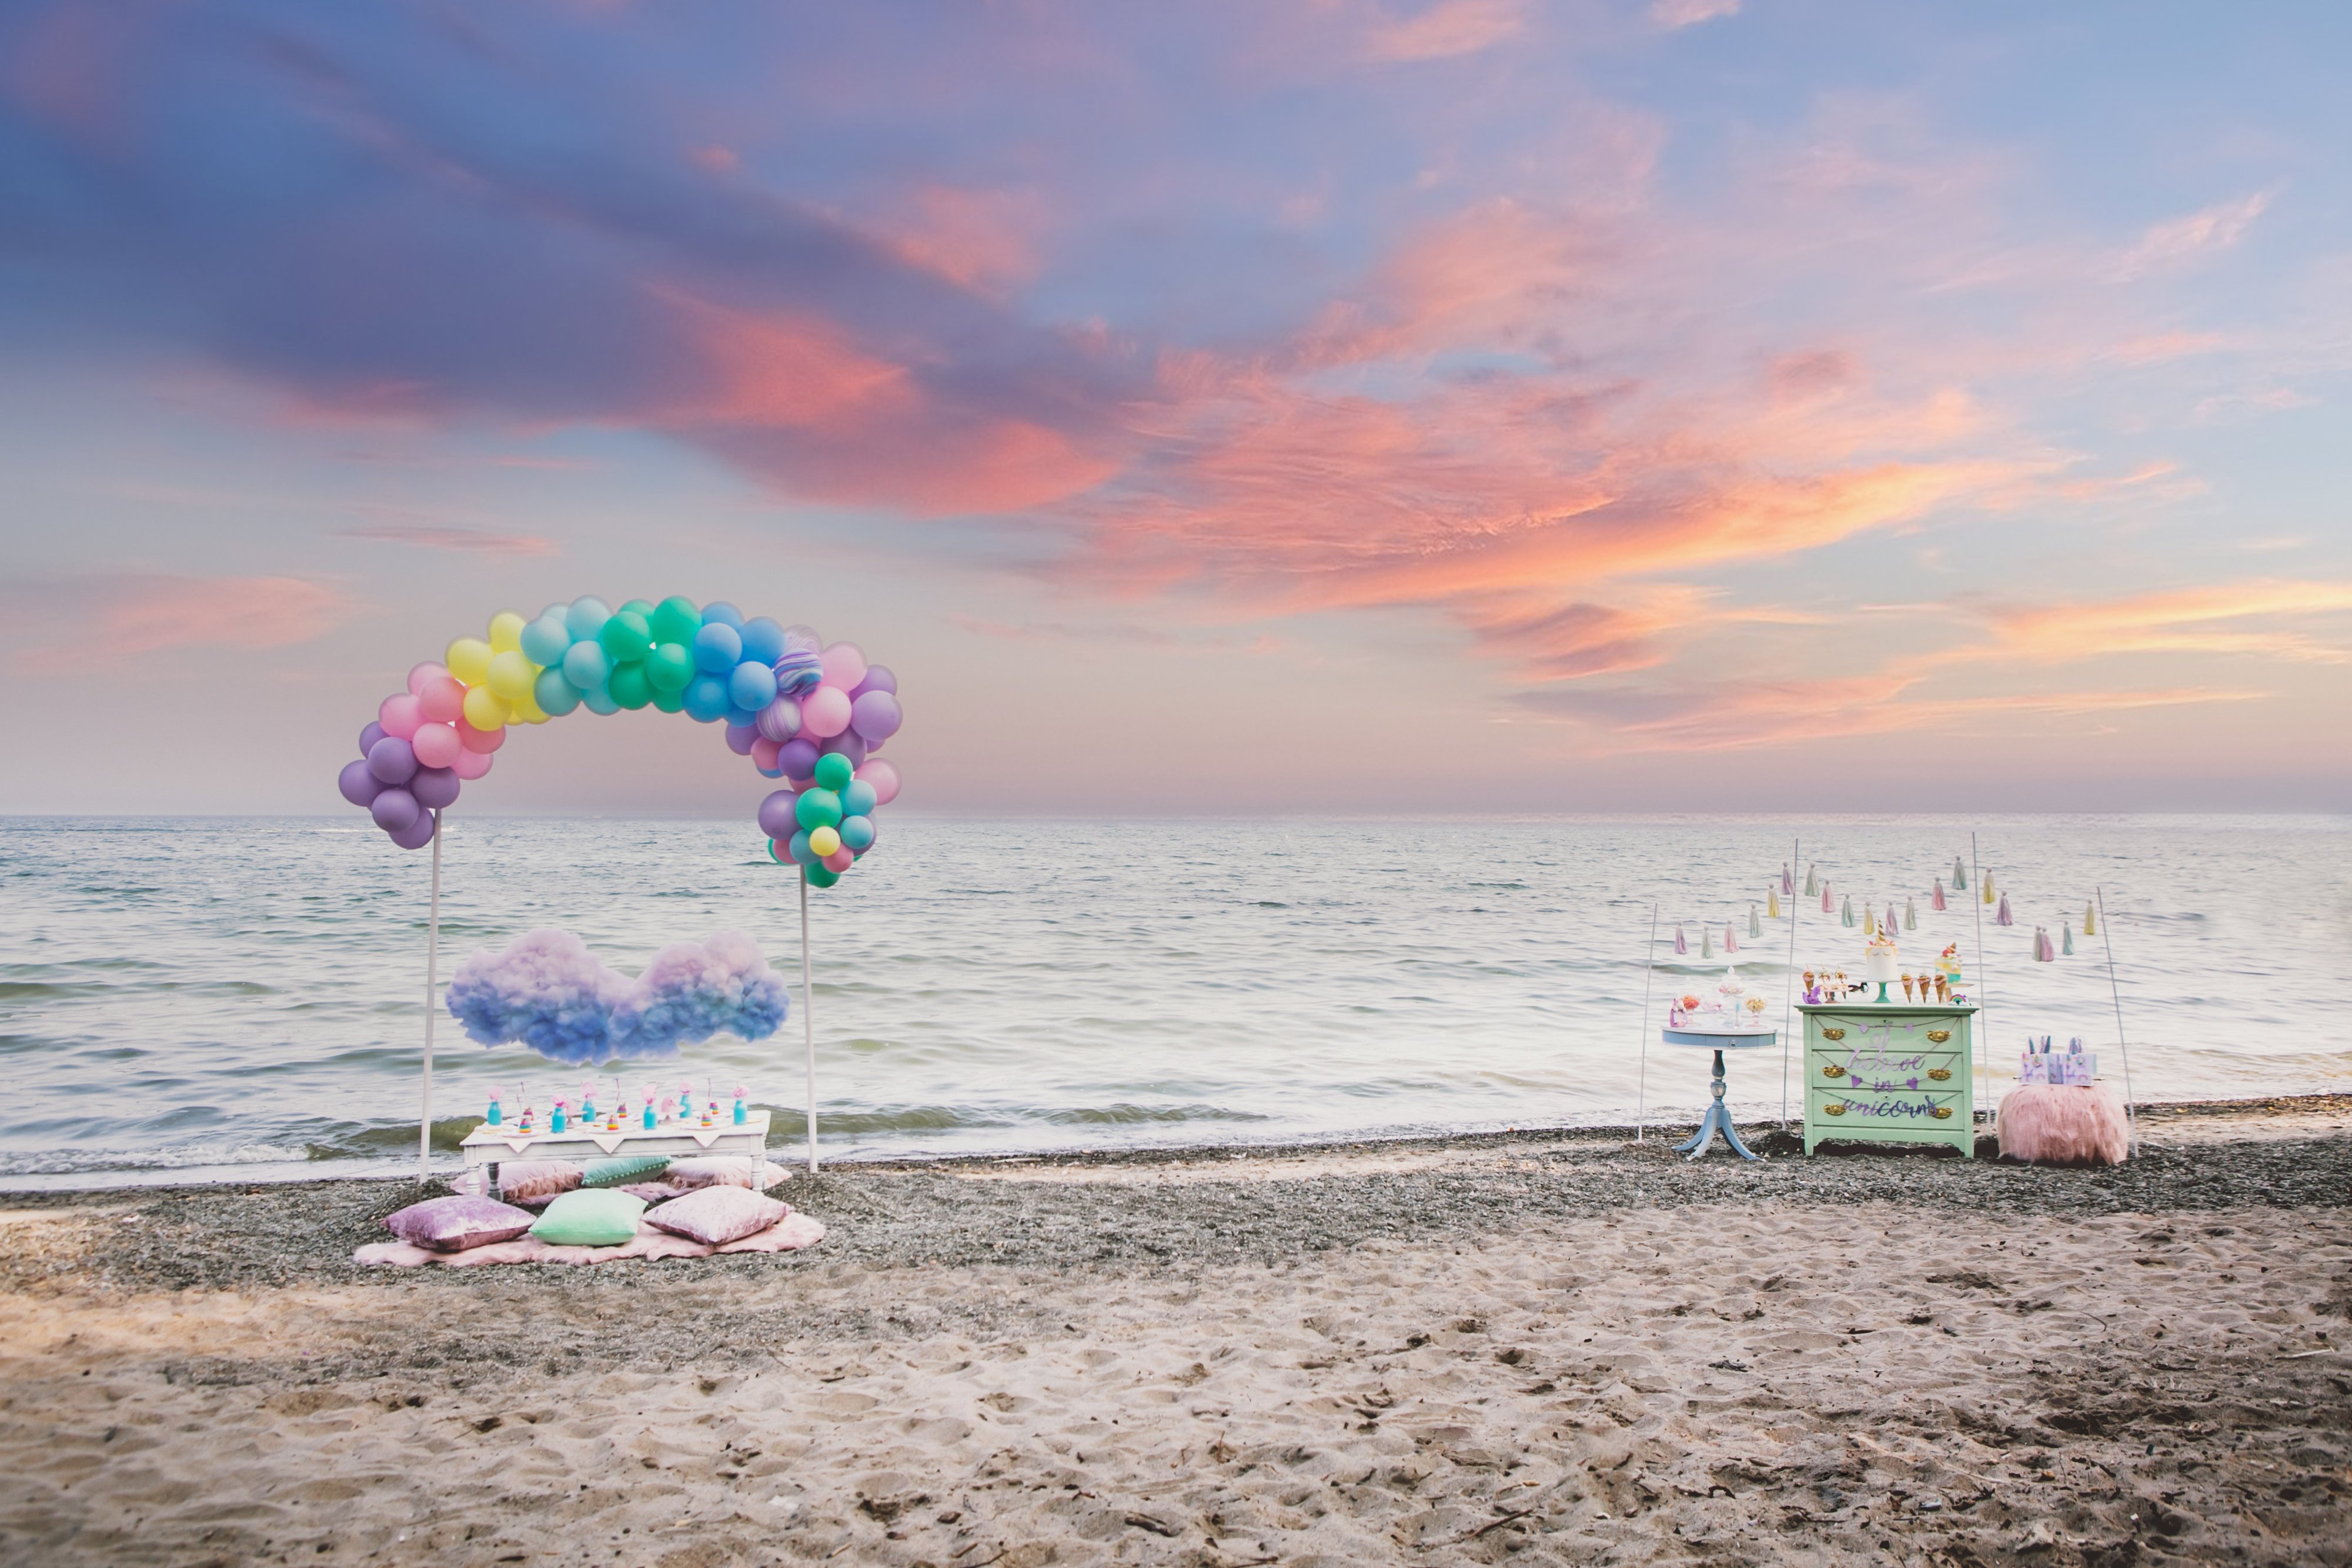 A unicorn and rainbows themed kids birthday party on the beach